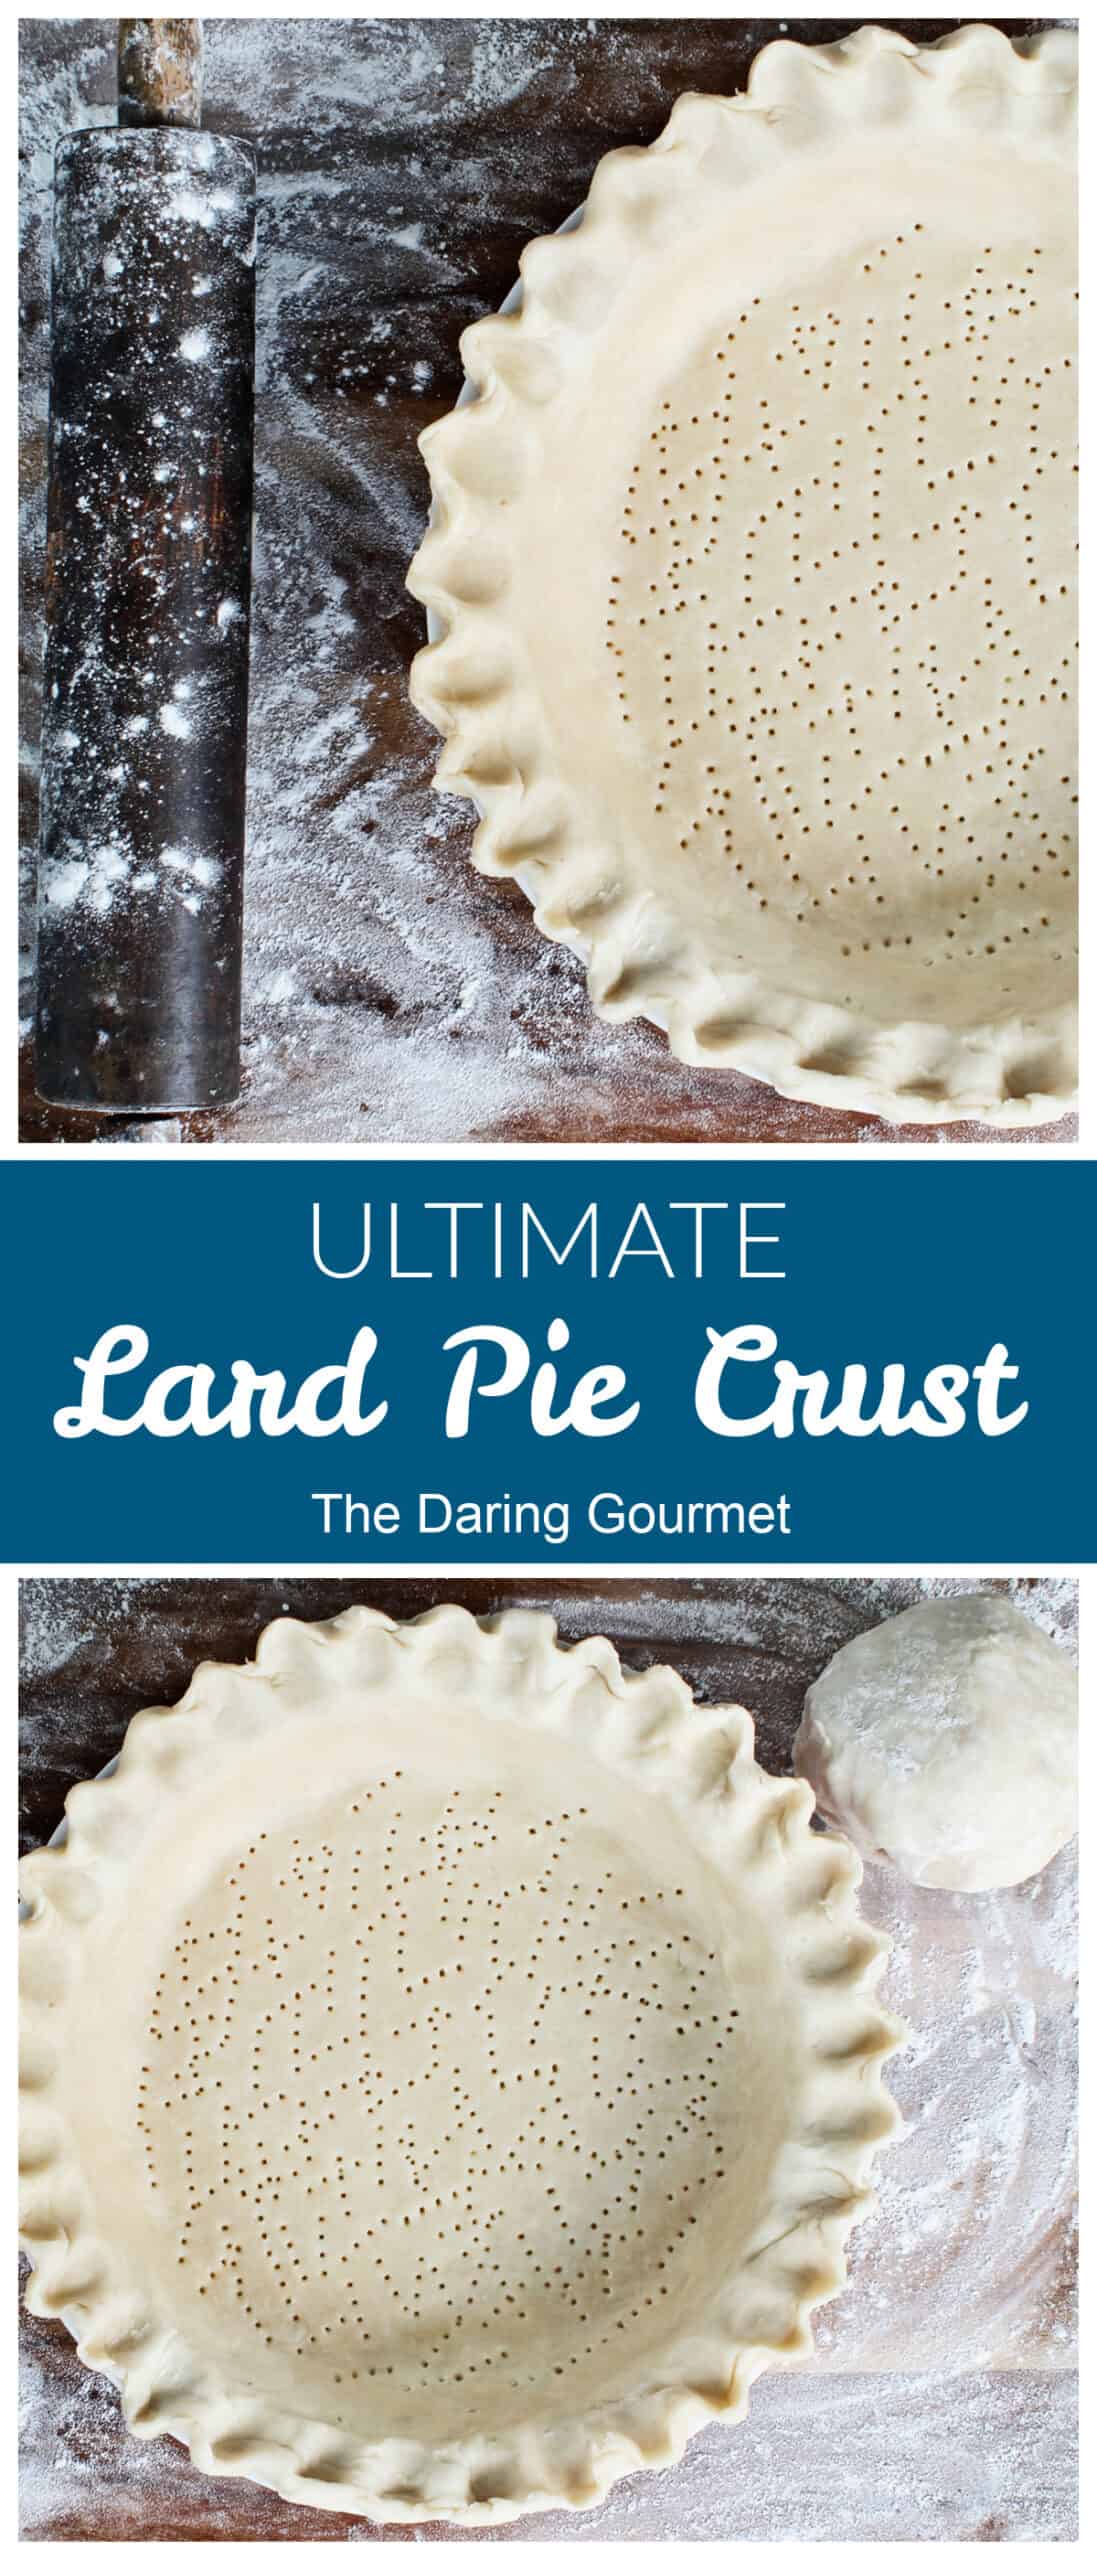 lard pie crust recipe best homemade shortcrust pastry butter 